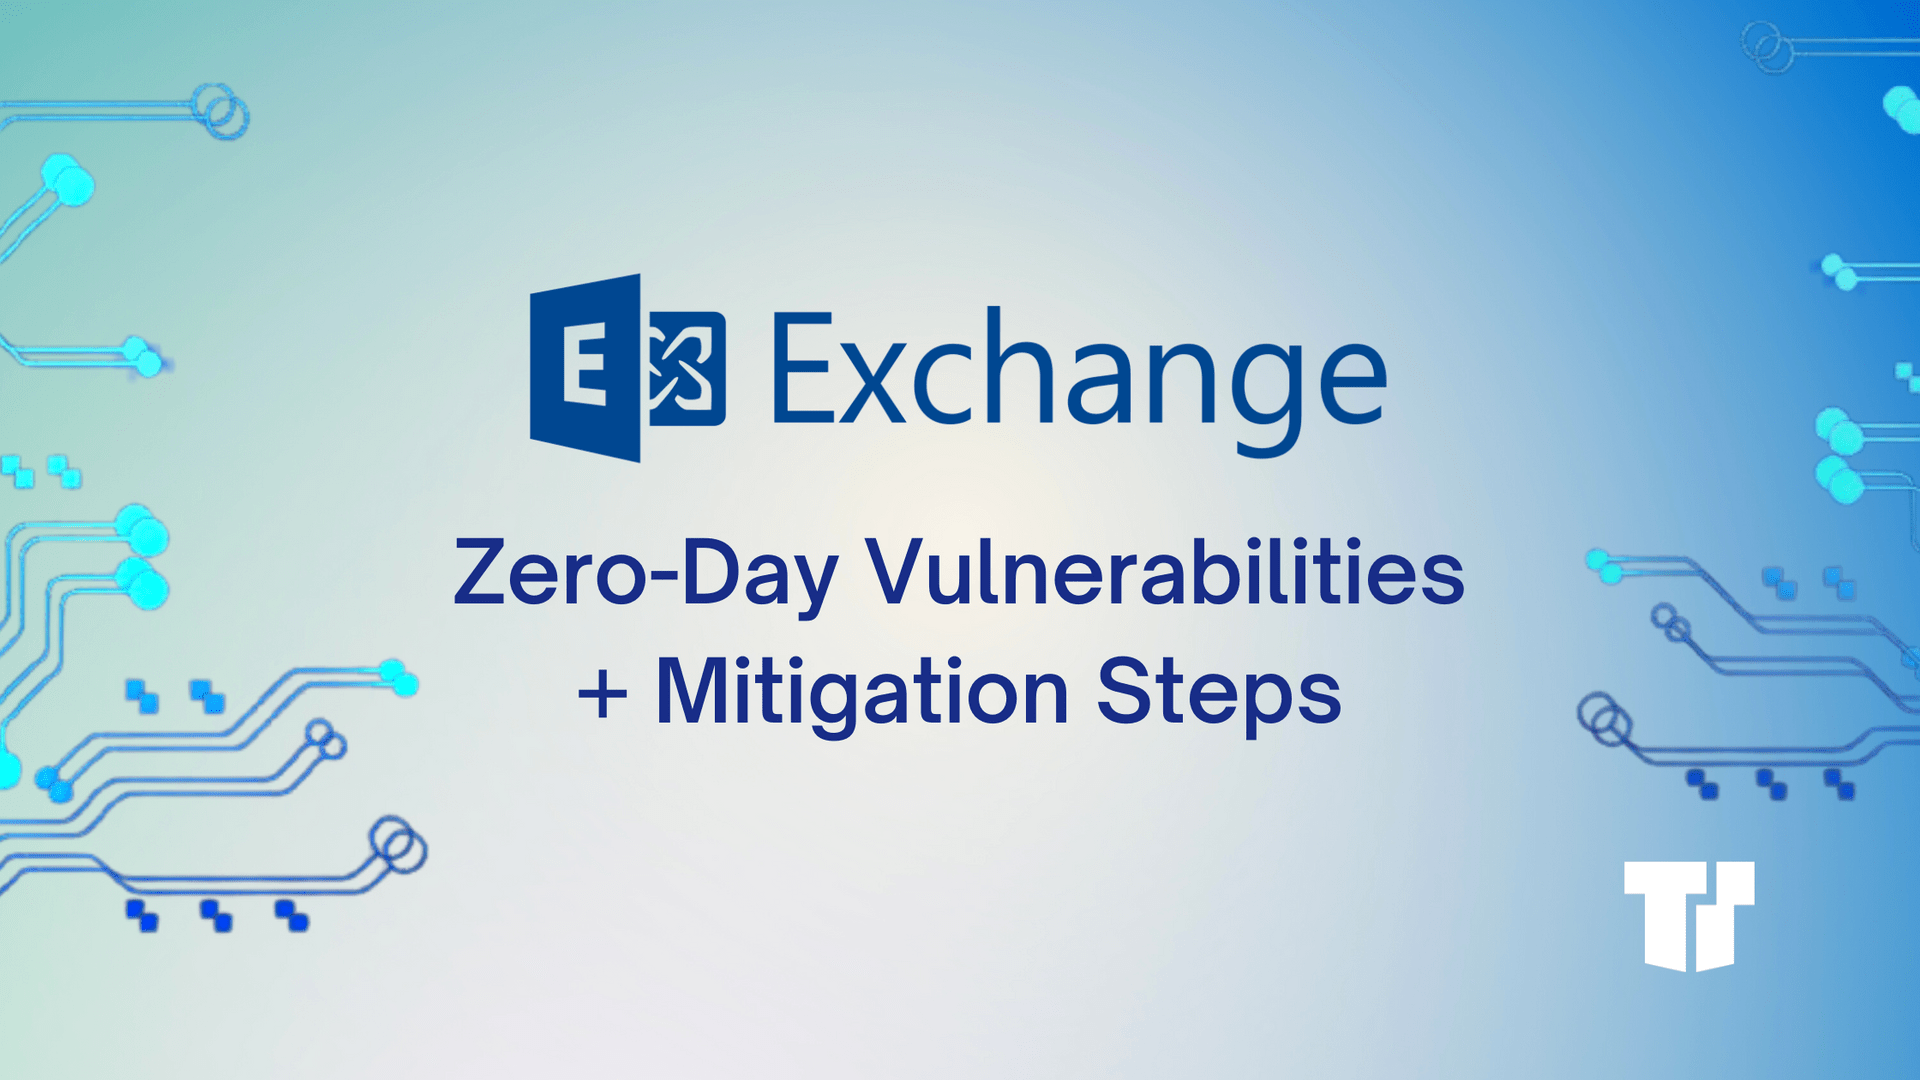 Zero-Day Vulnerabilities Affecting Exchange Server cover image